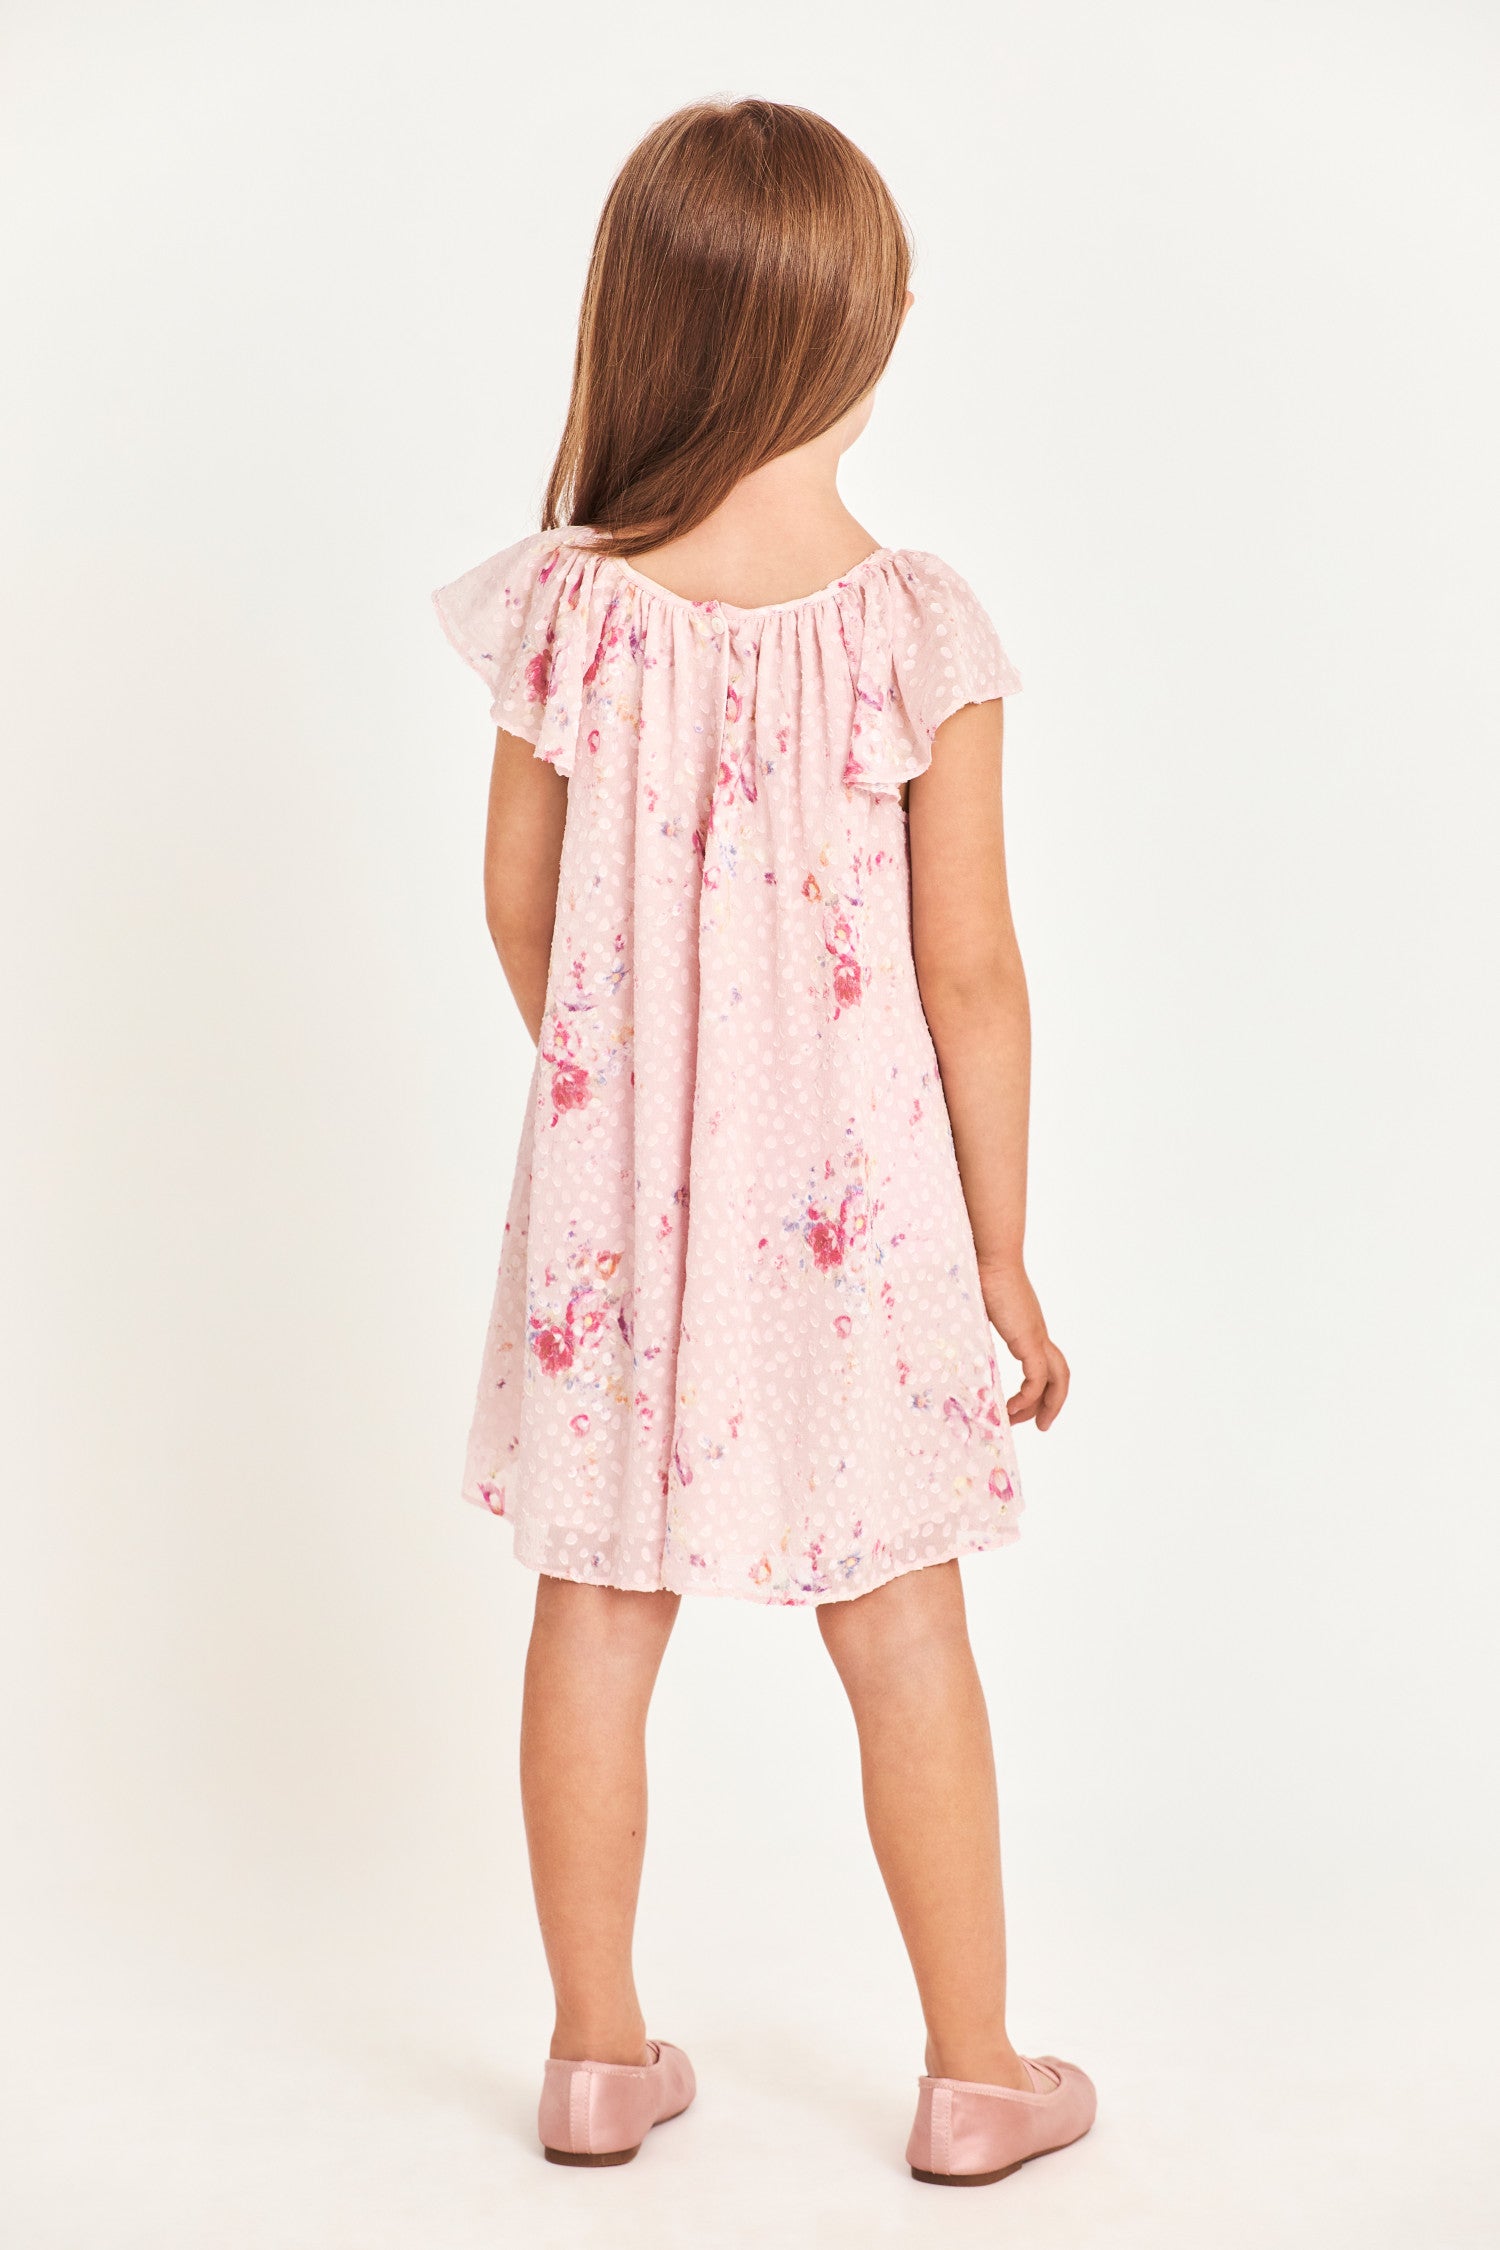 Back image of model wearing kids pink mini dress